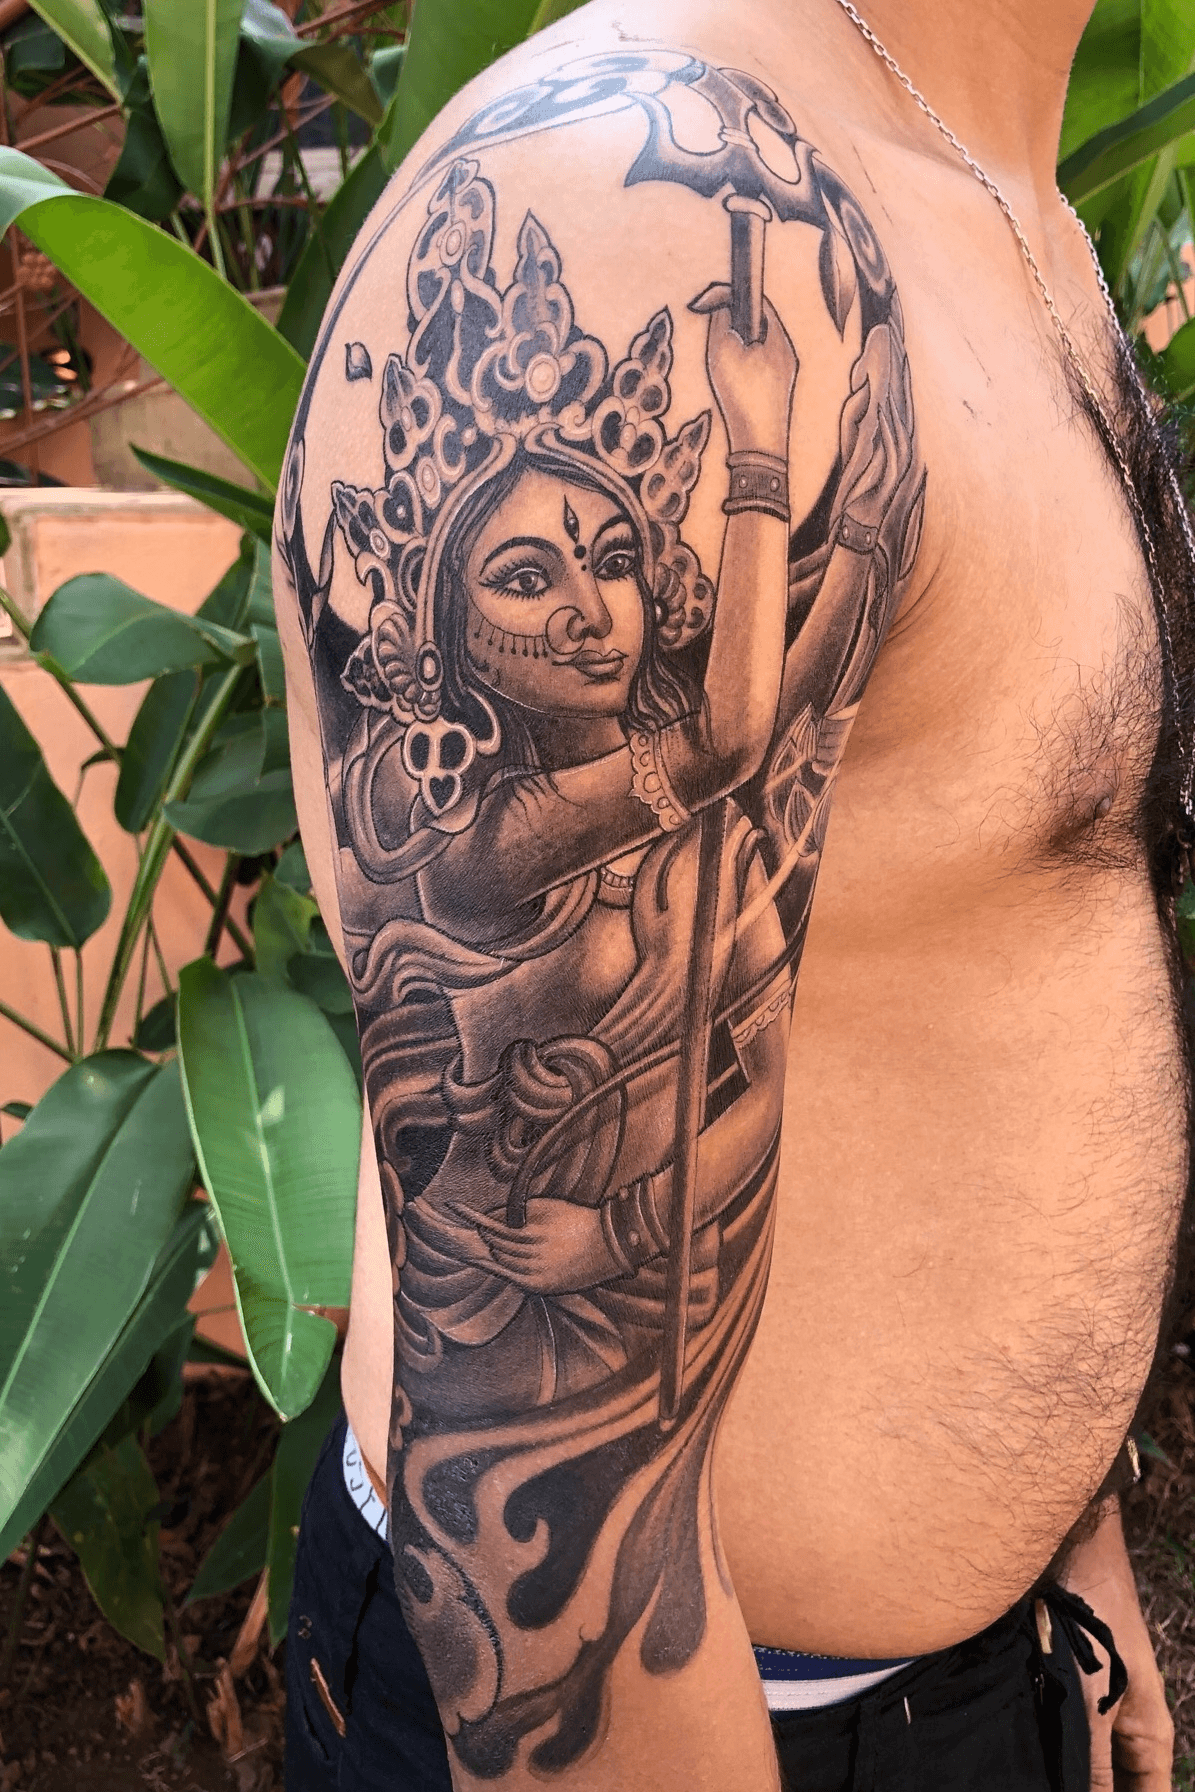 Maa trasul shiva third eye rising Sun Shakti Durga mix tattoo having great  meanings  Tattoos Om tattoo Flying bird tattoo